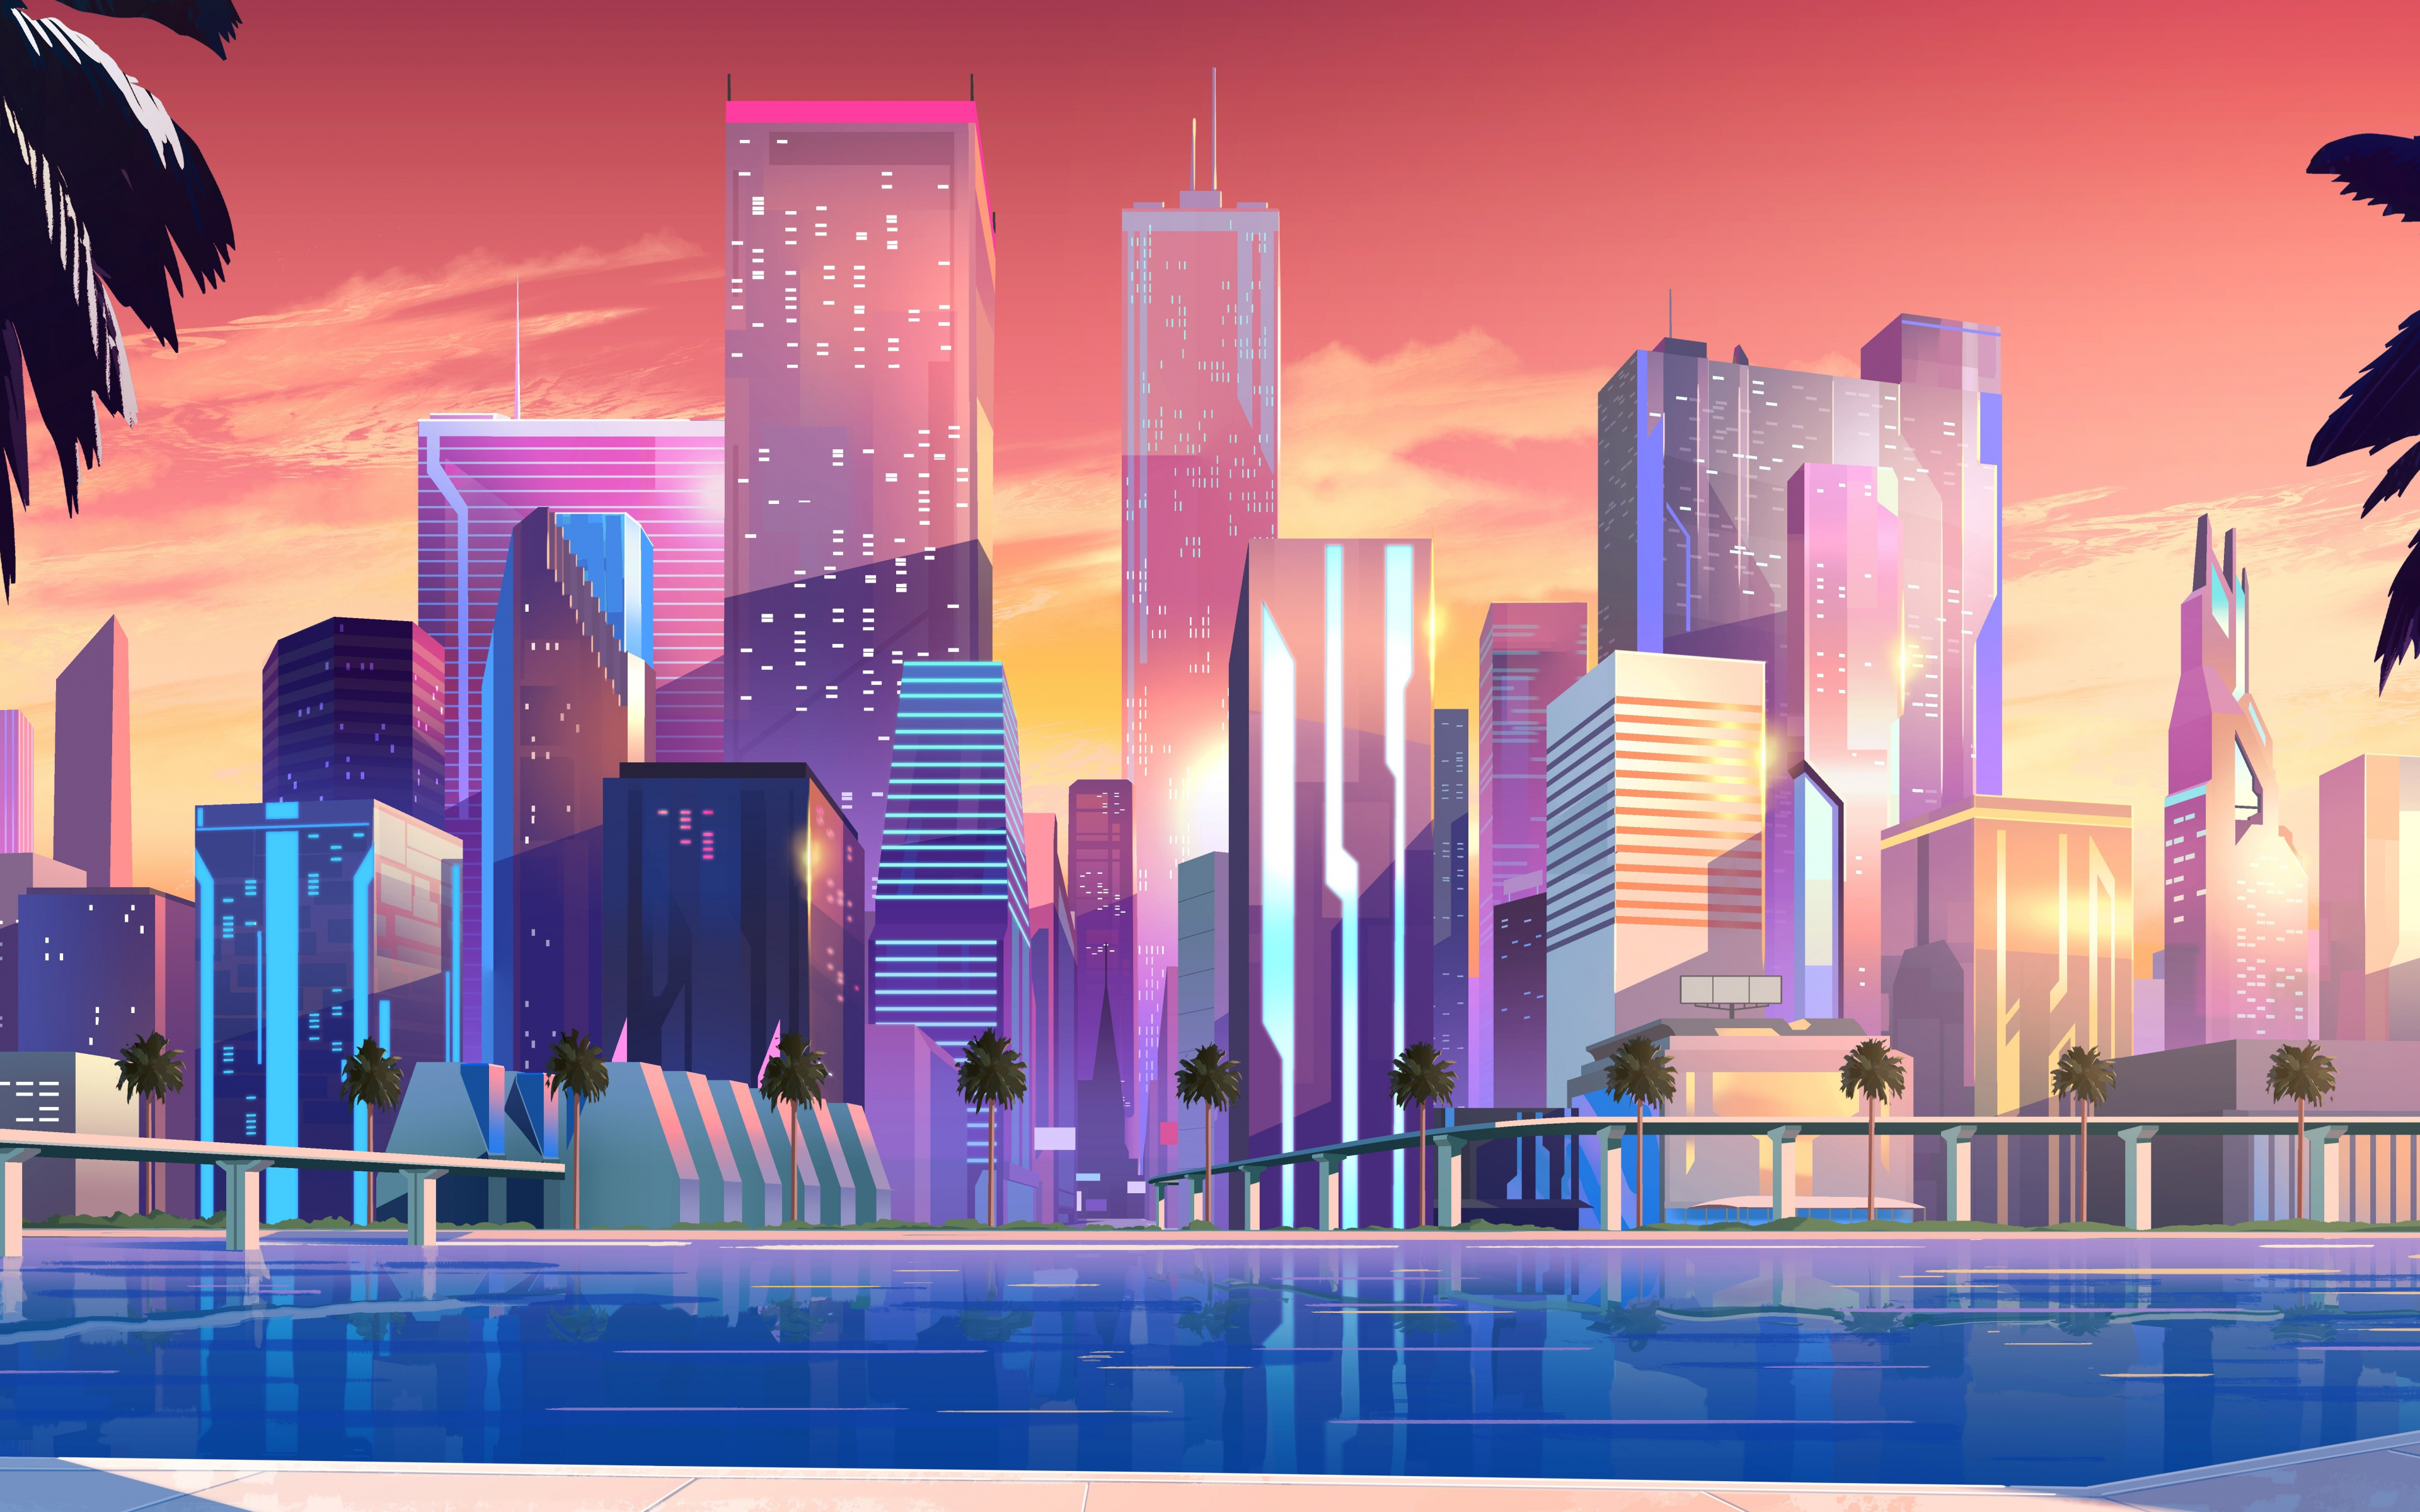 Aesthetic city wallpaper 4k, HeroScreen - Cool Wallpapers